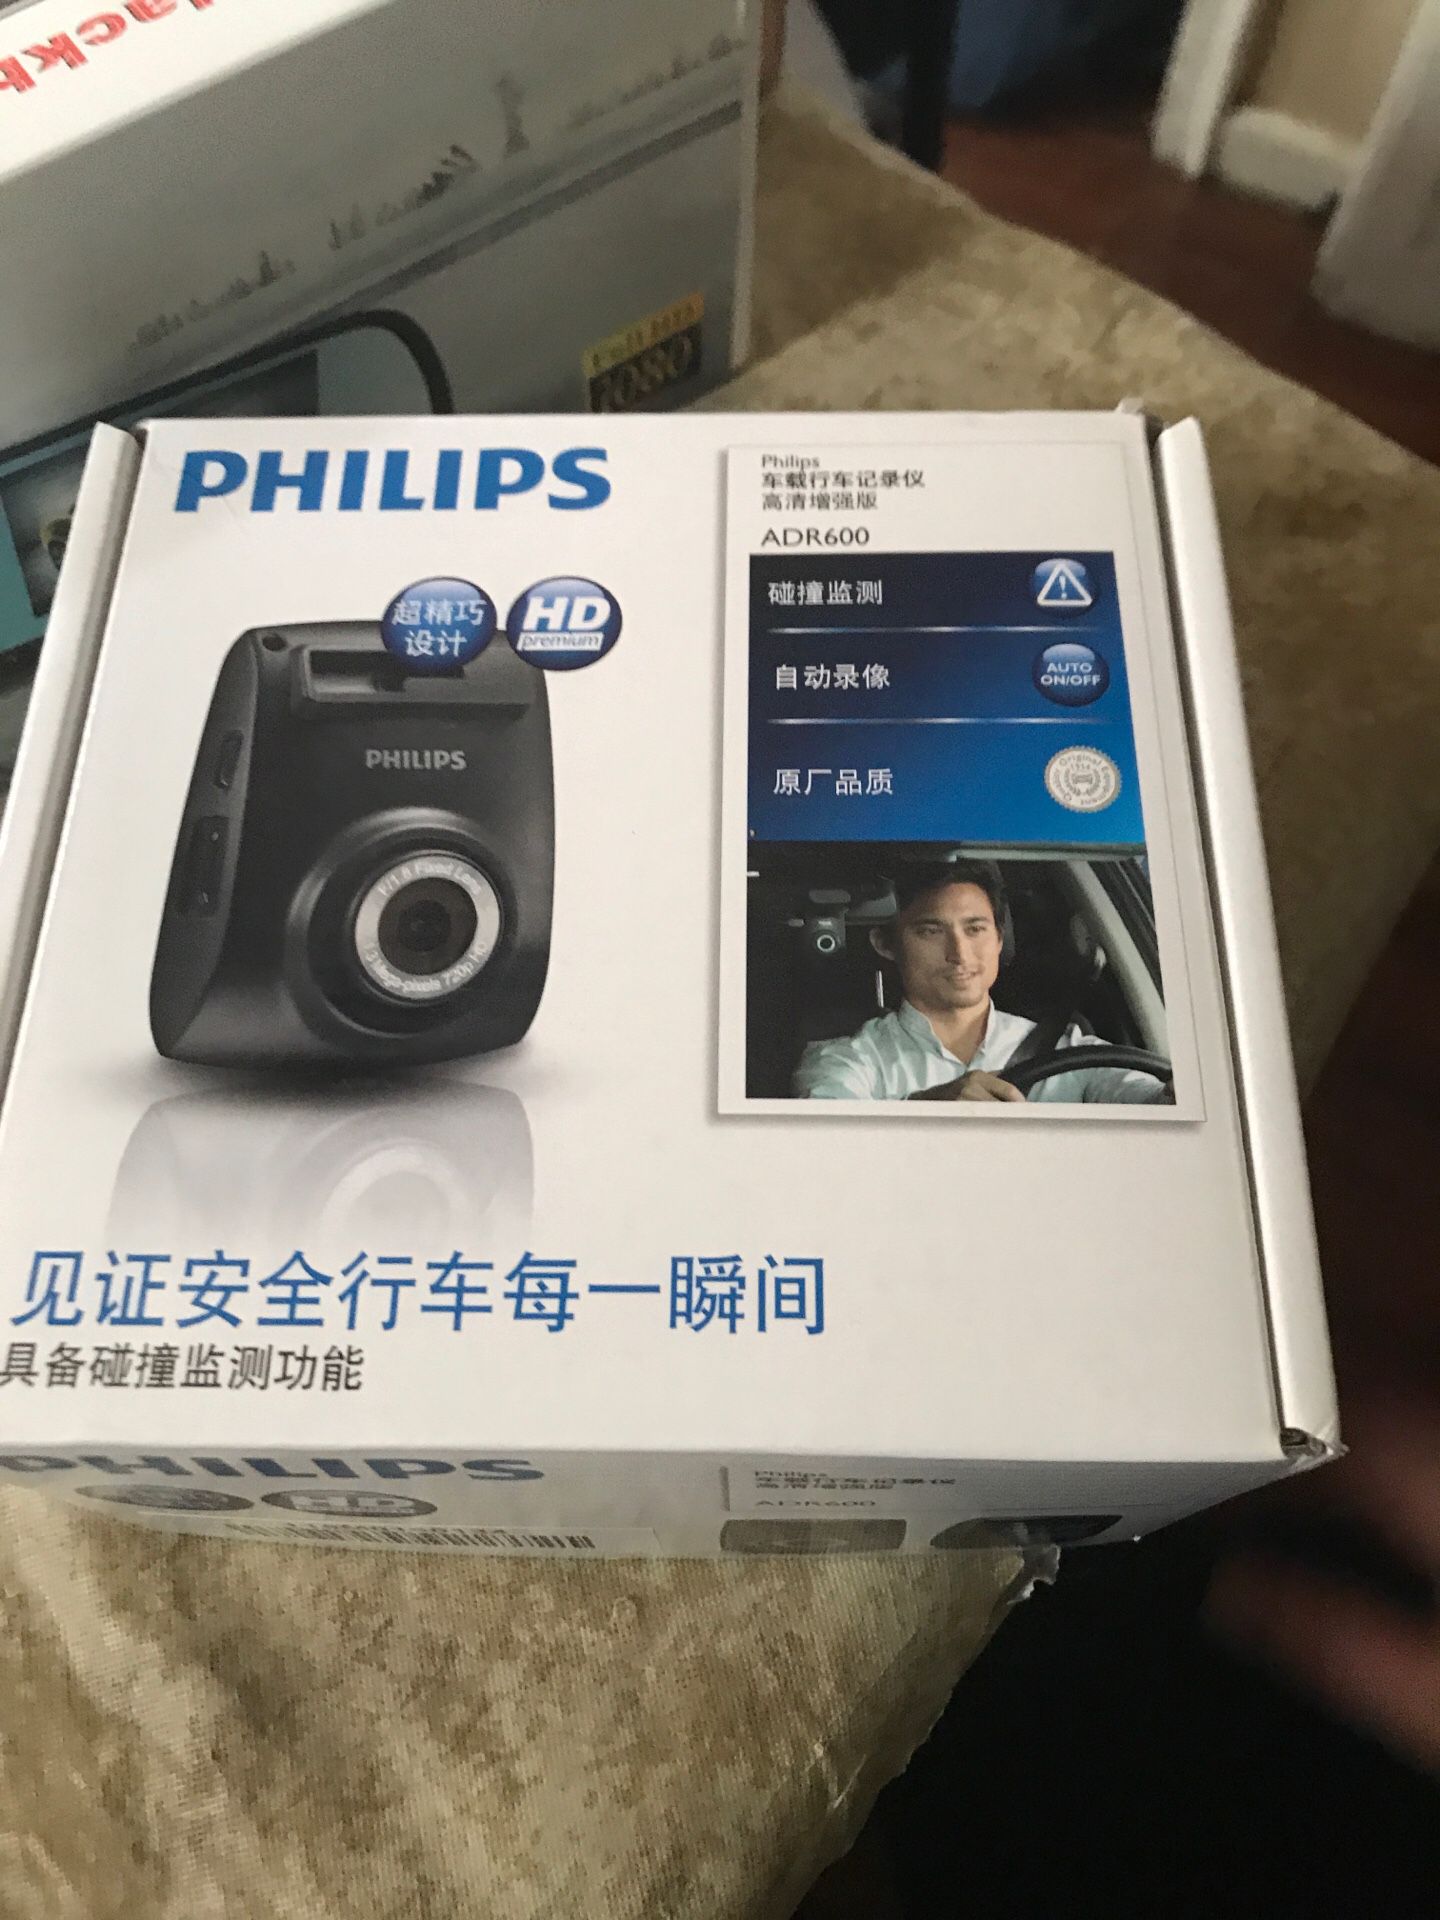 Compact dash cam